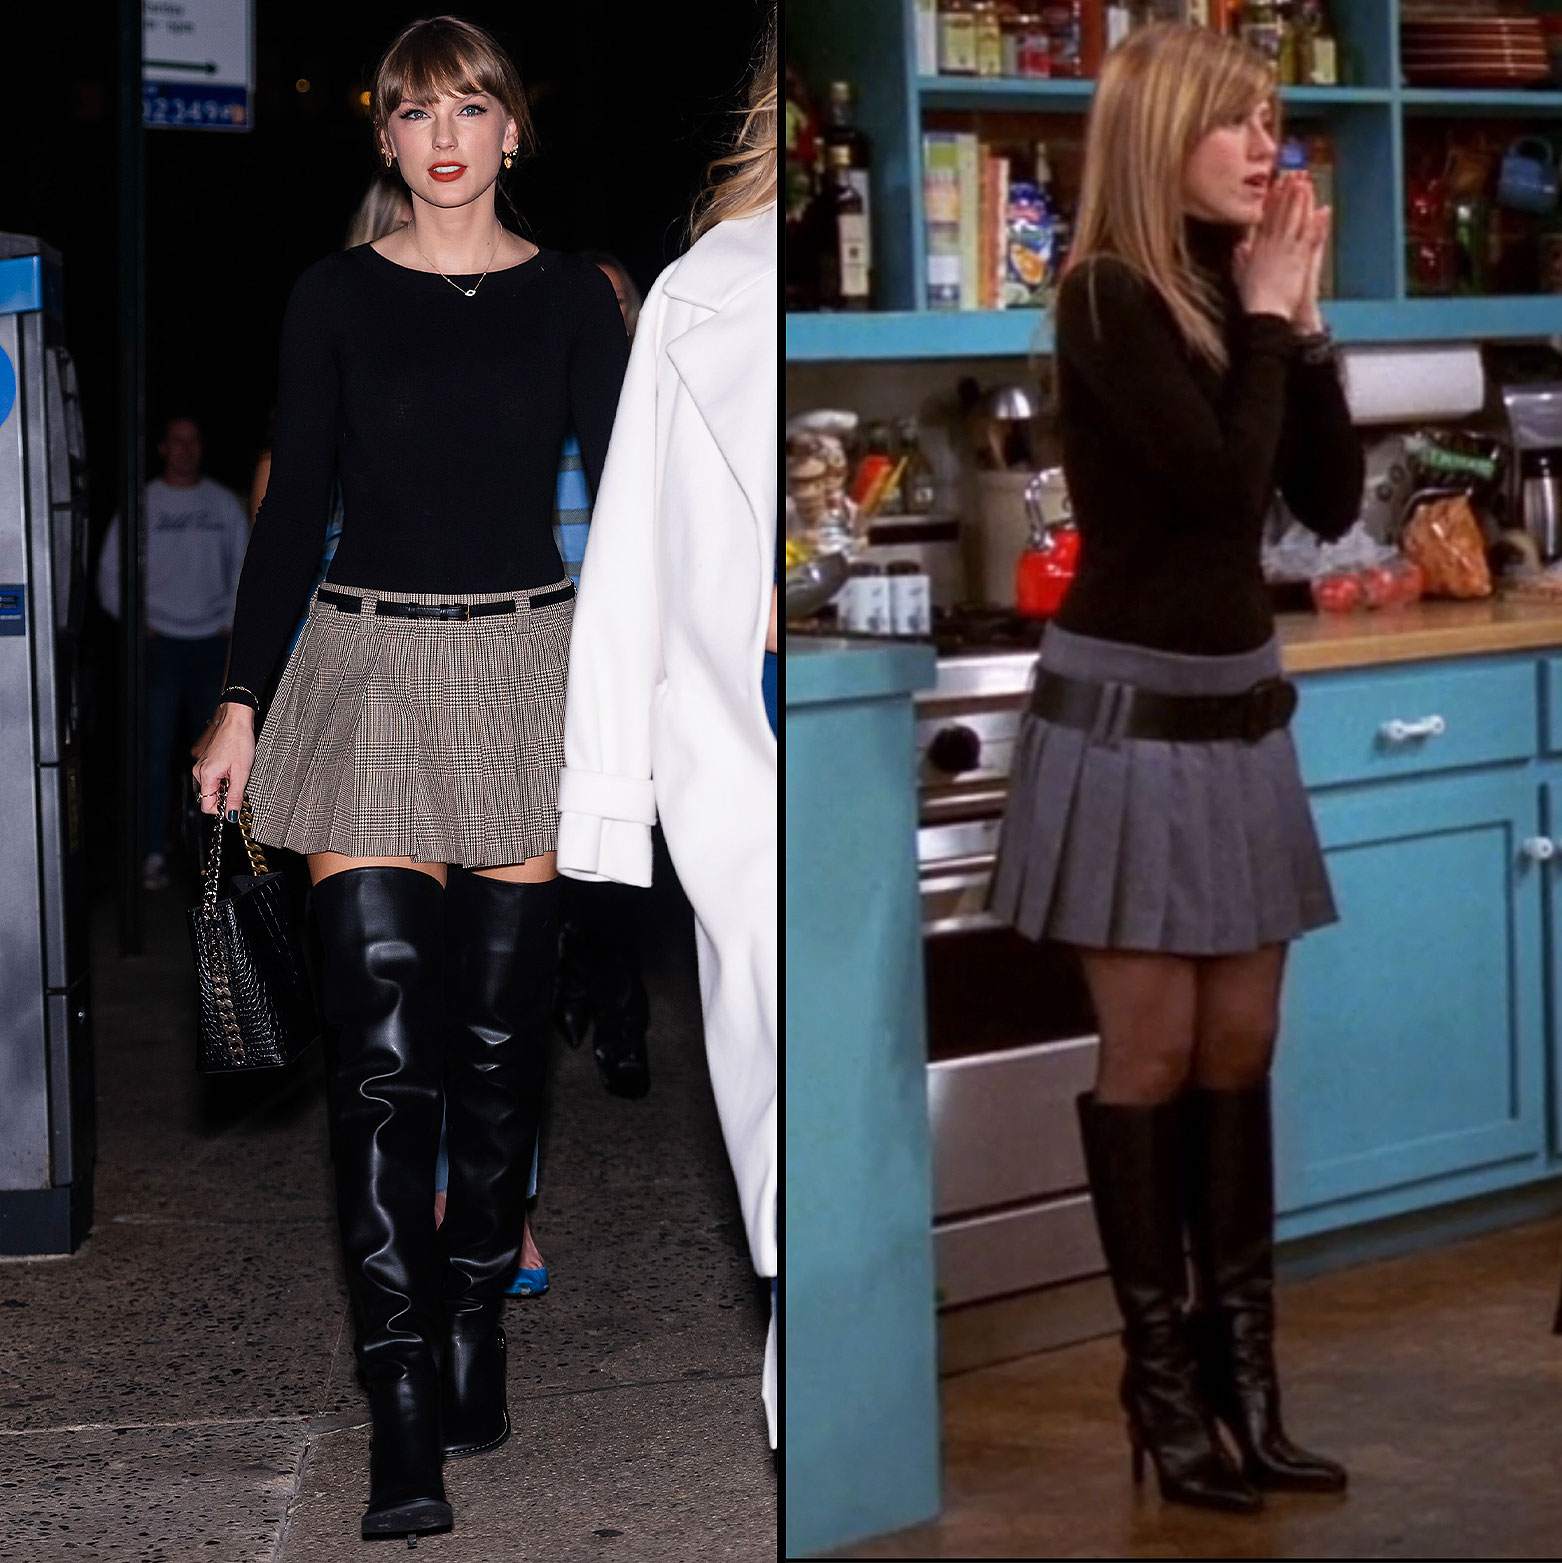 Taylor Swift Looks Just Like Rachel Green From 'Friends' in Plaid